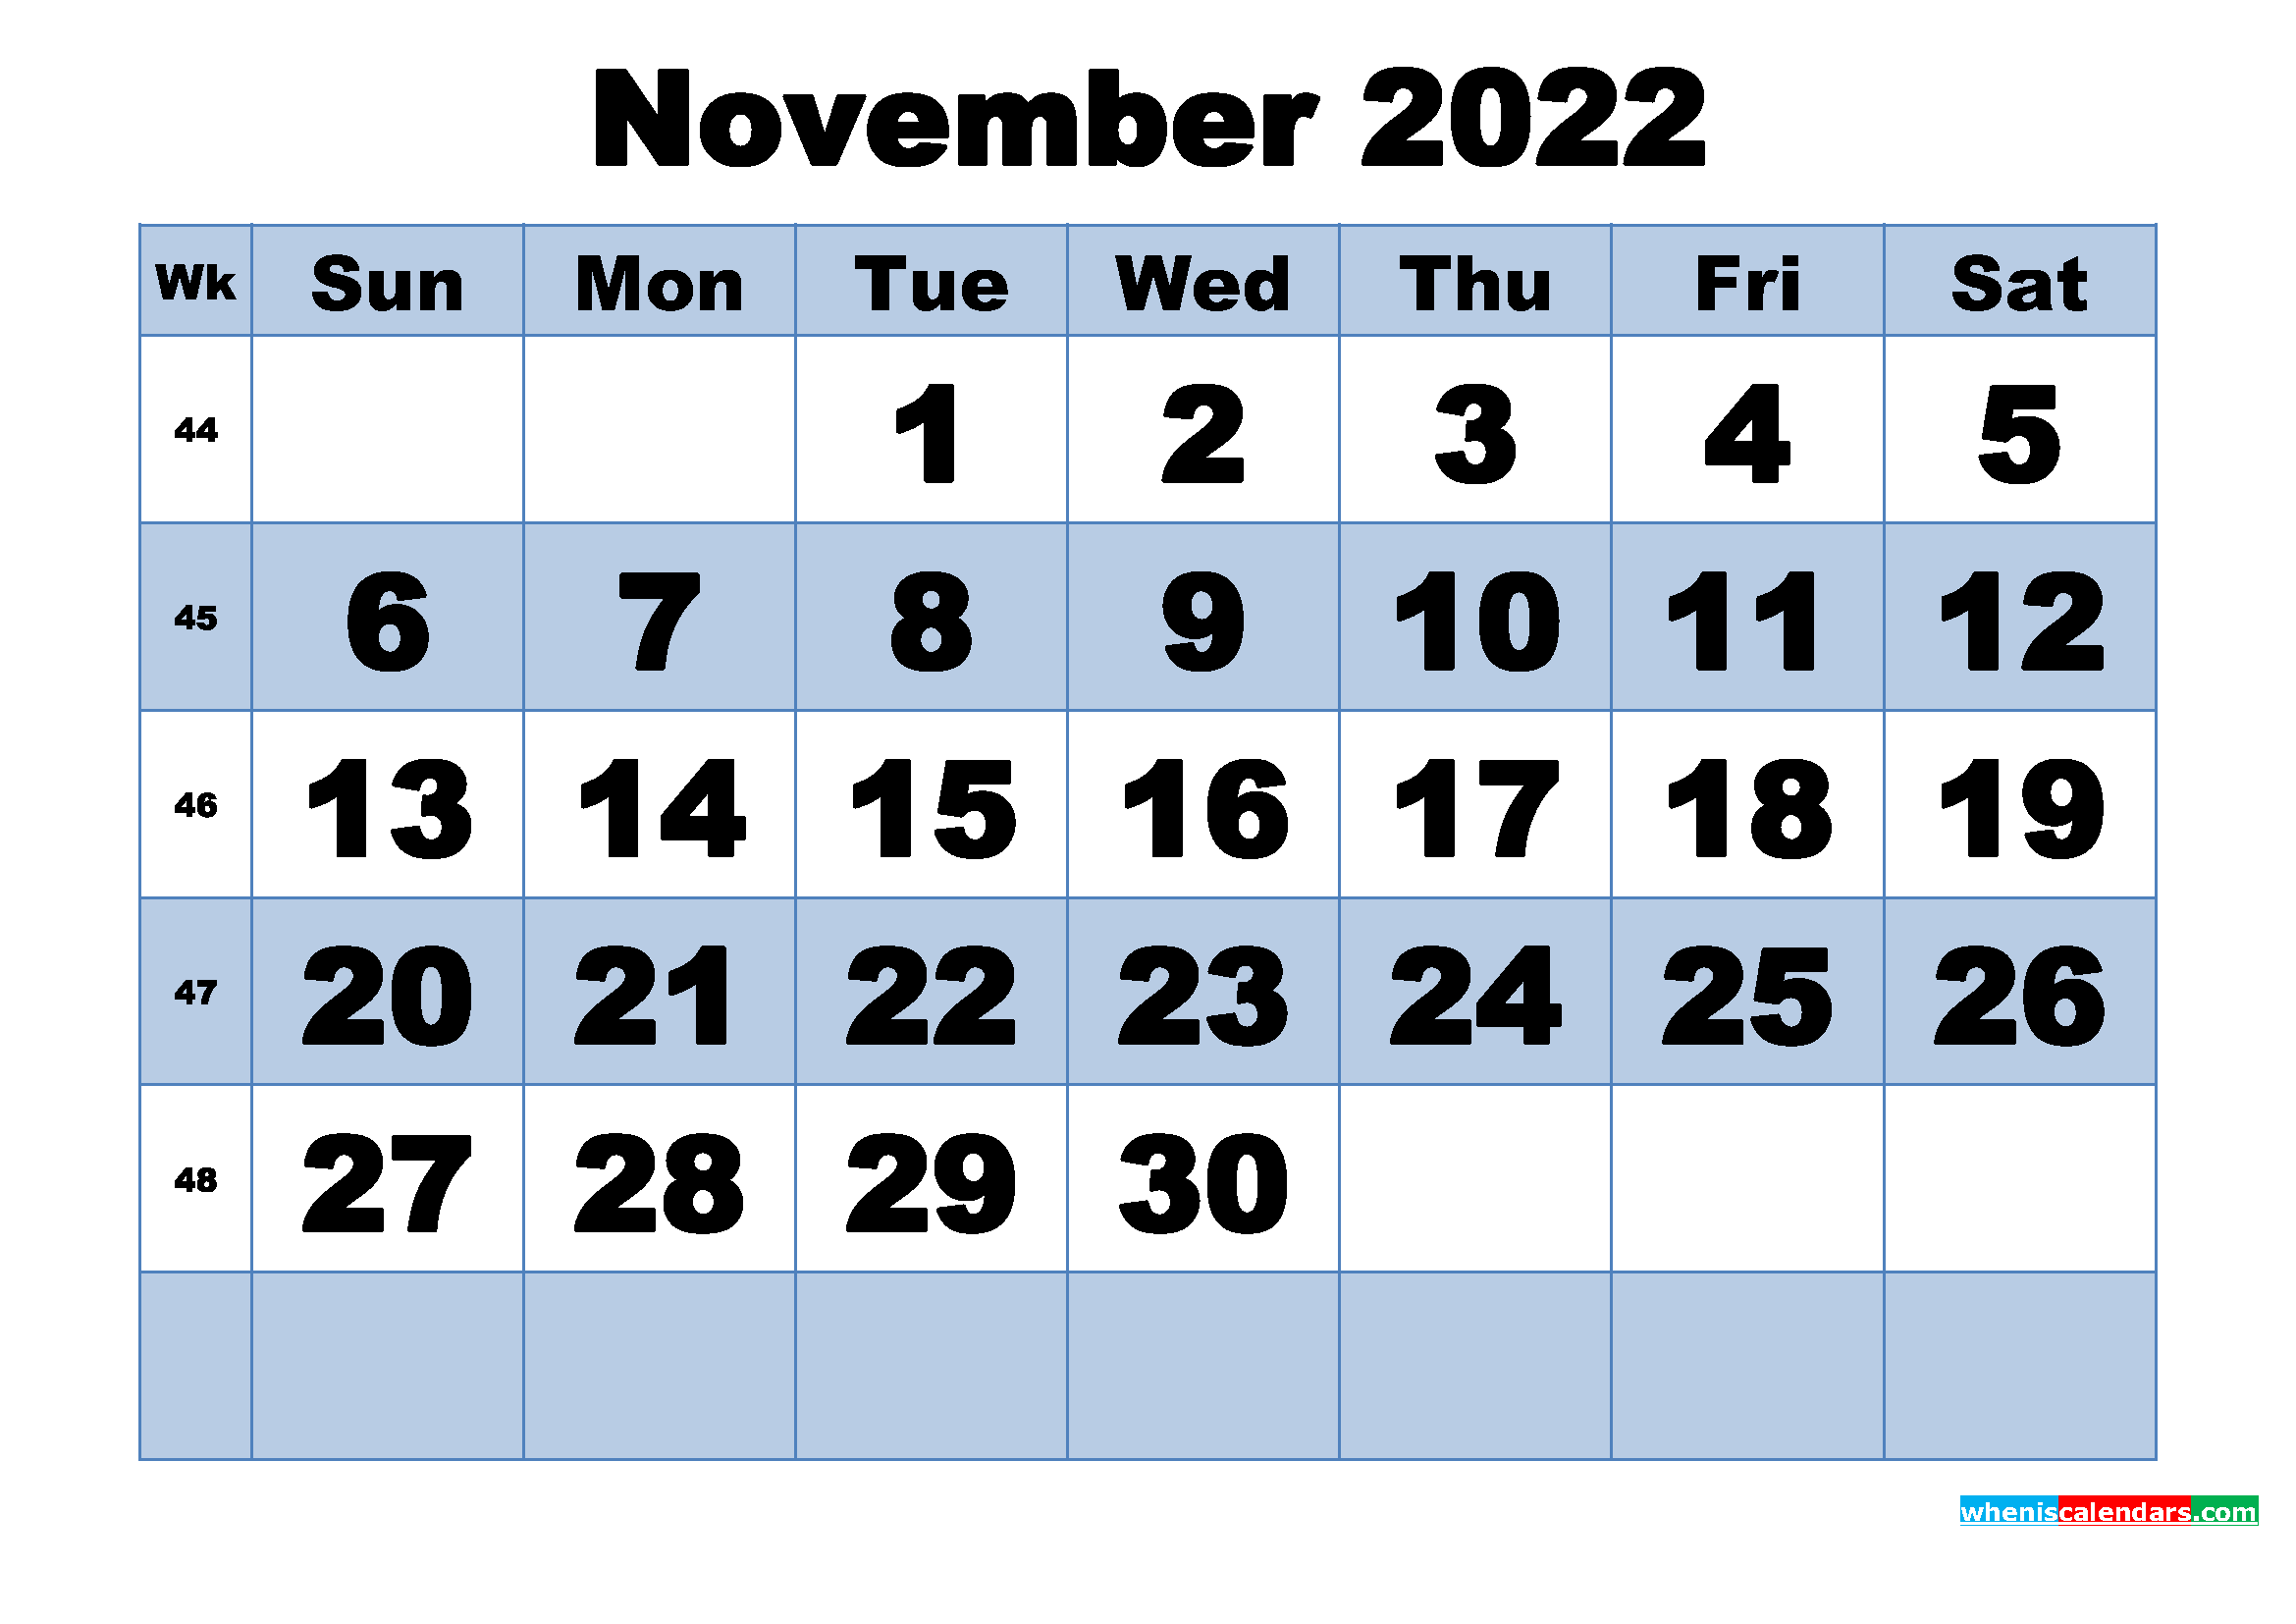 november-2022-wheniscalendars-stundenzettel-yearly-scroll-arialblk-further-october-news